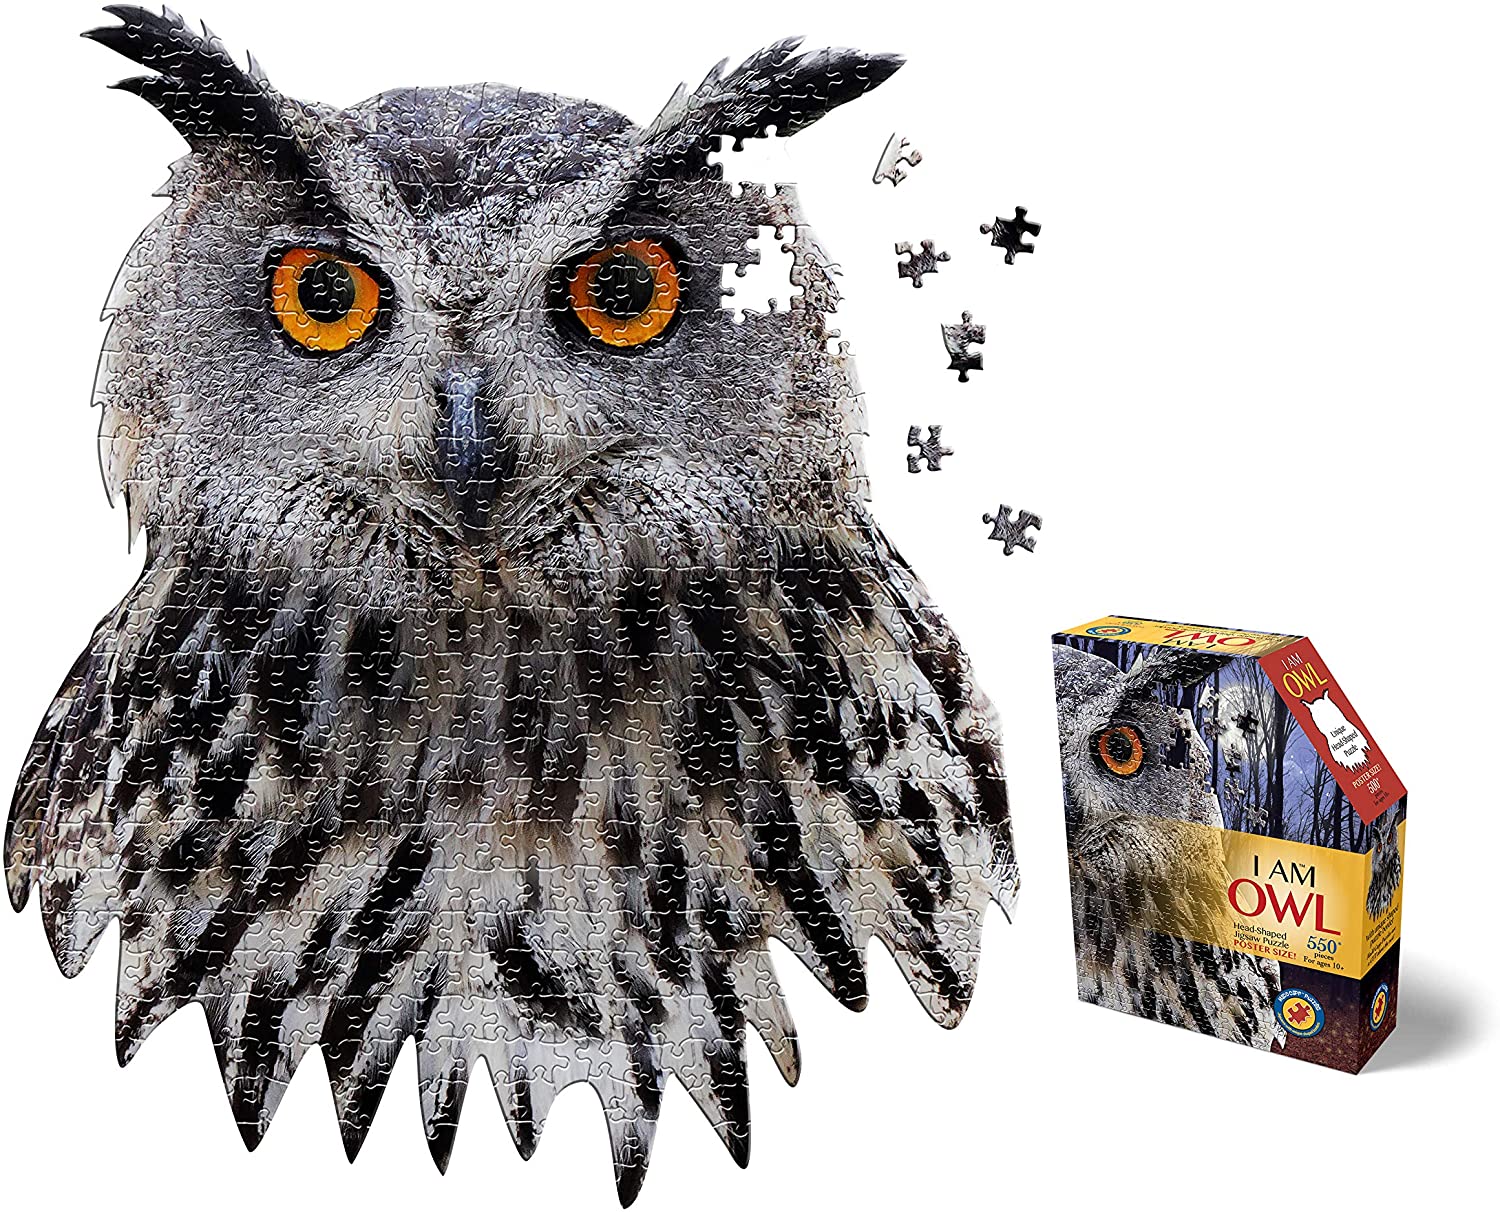 I Am Owl Puzzle